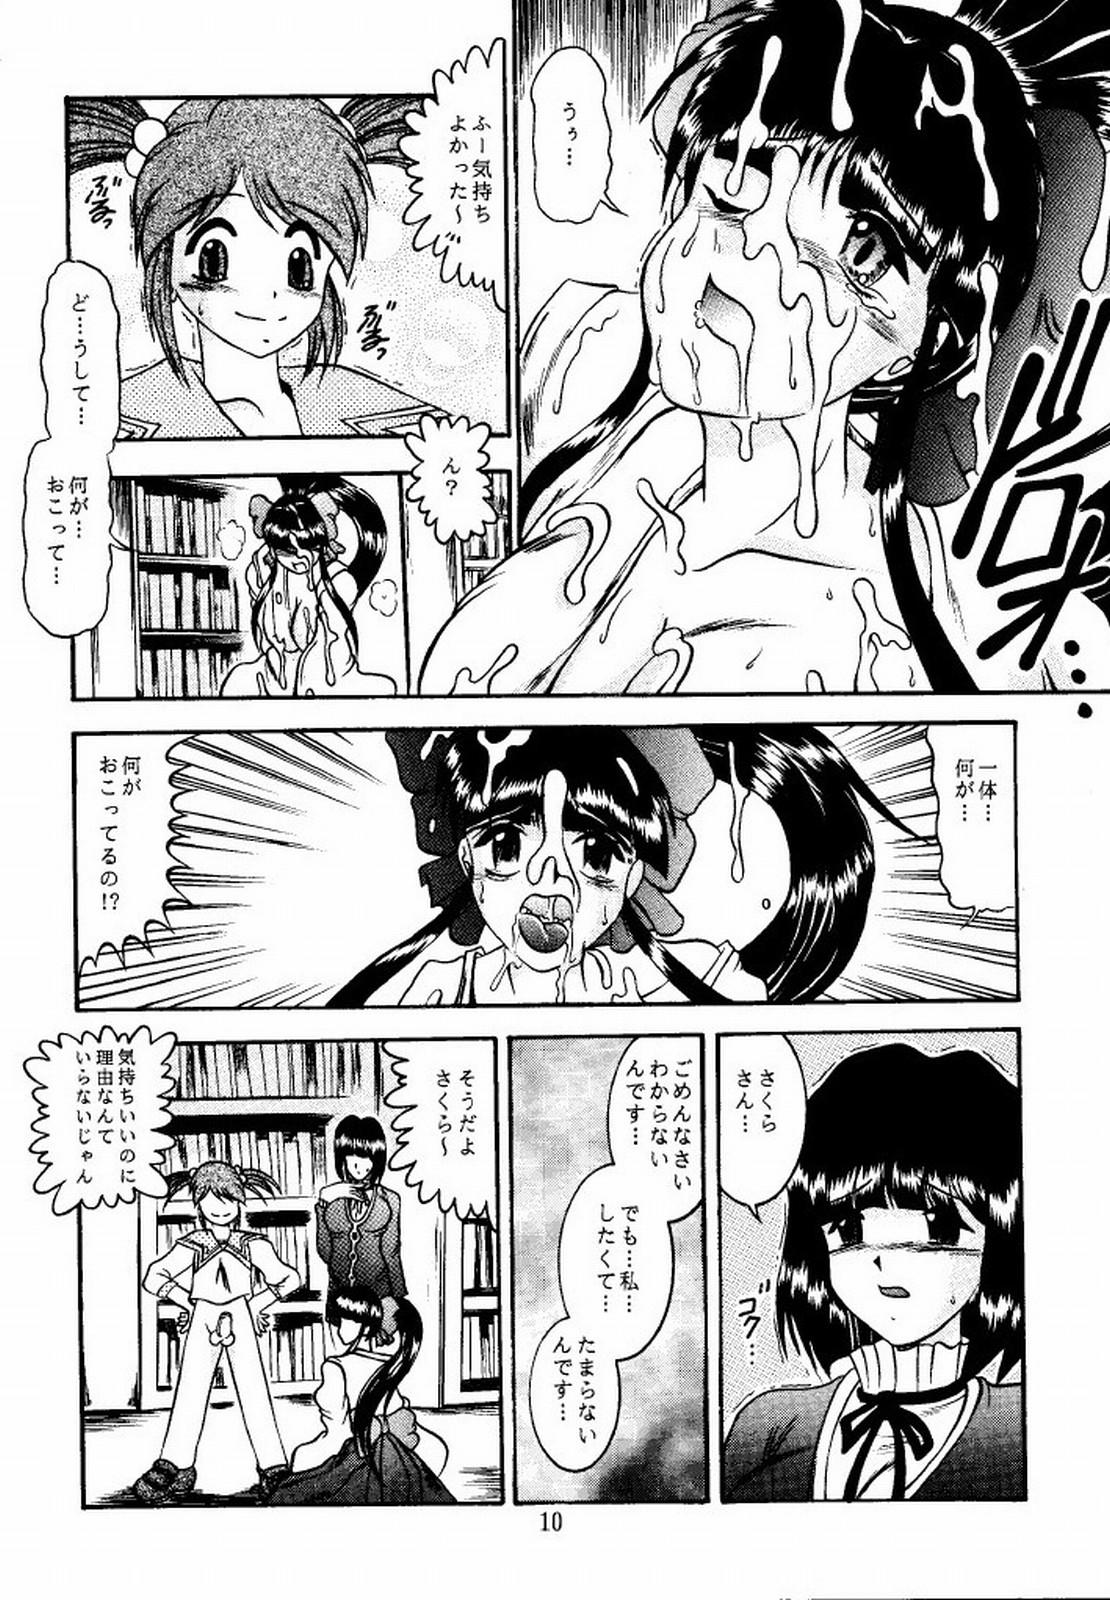 Stretching Eternal DROWSINESS - Sakura taisen Girlnextdoor - Page 10